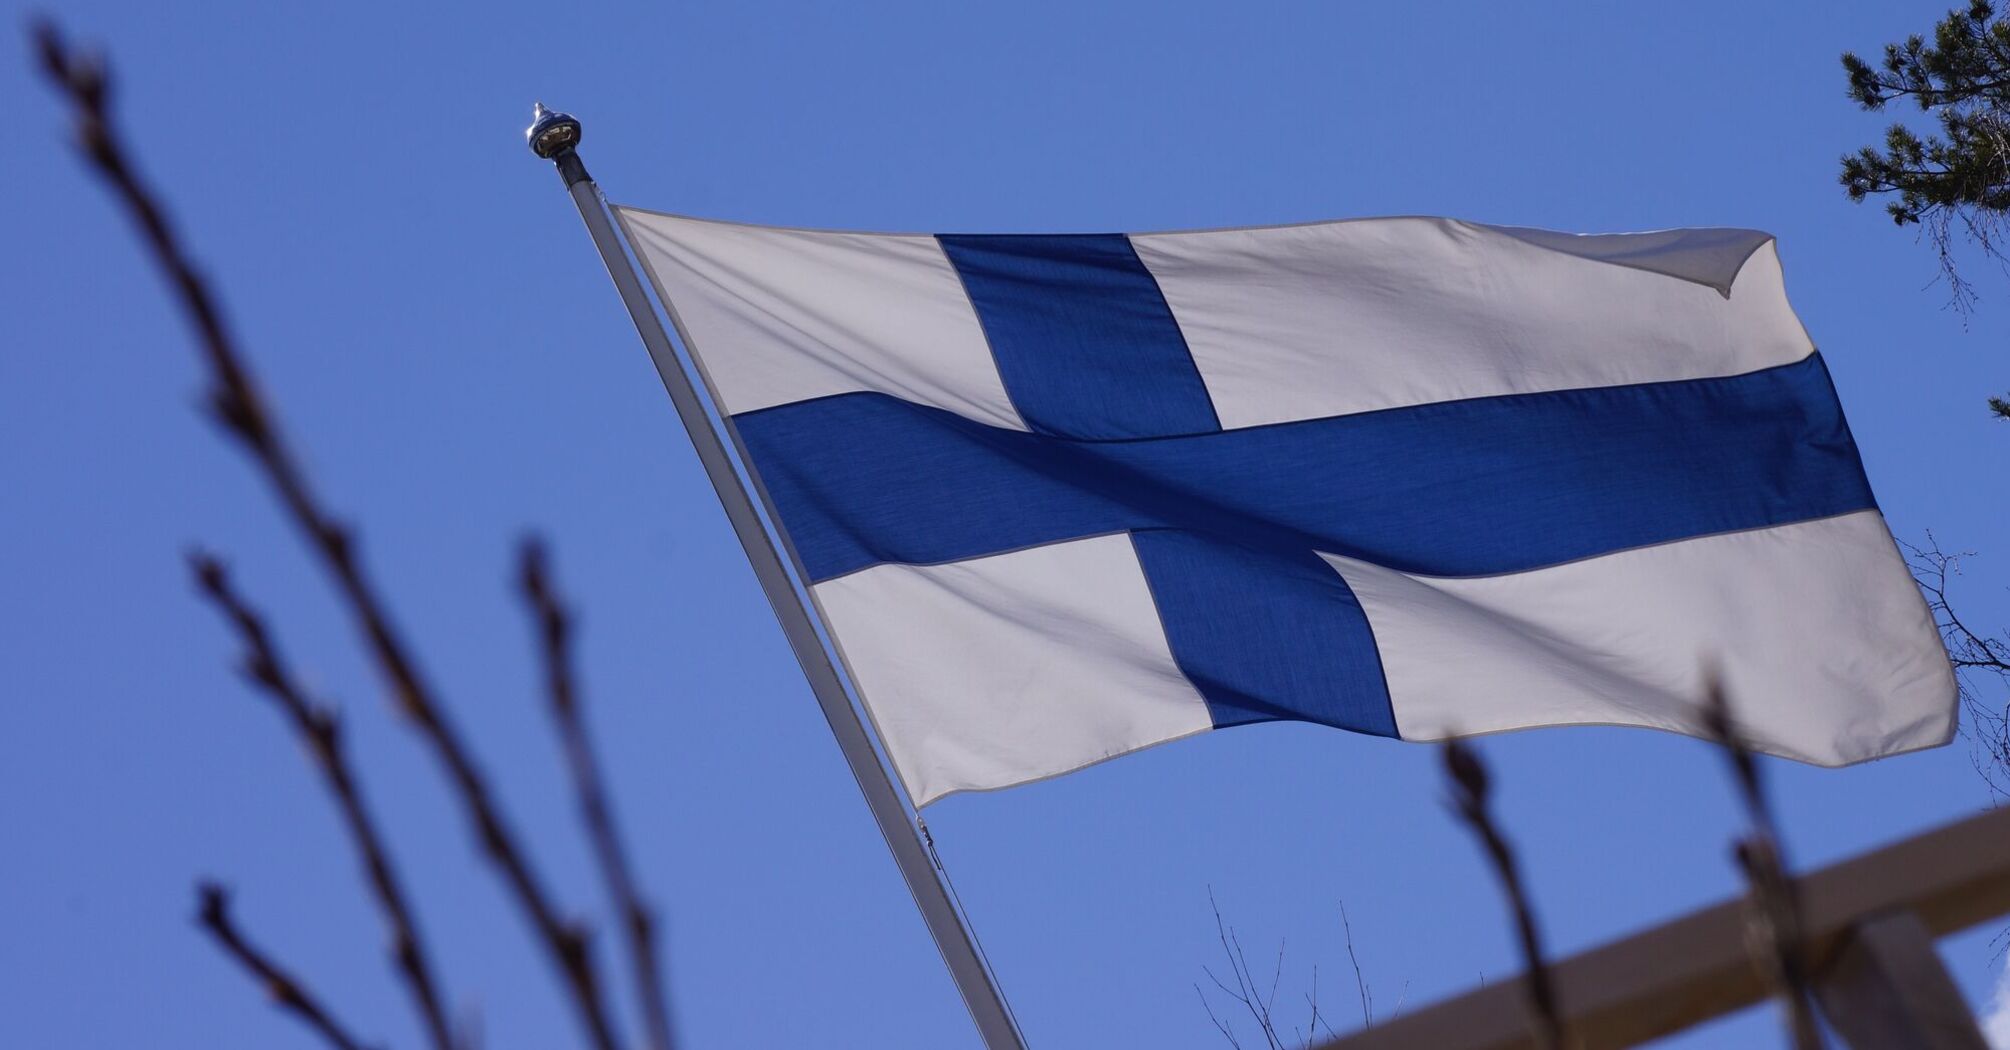 Massive political strikes could halt air travel in Finland